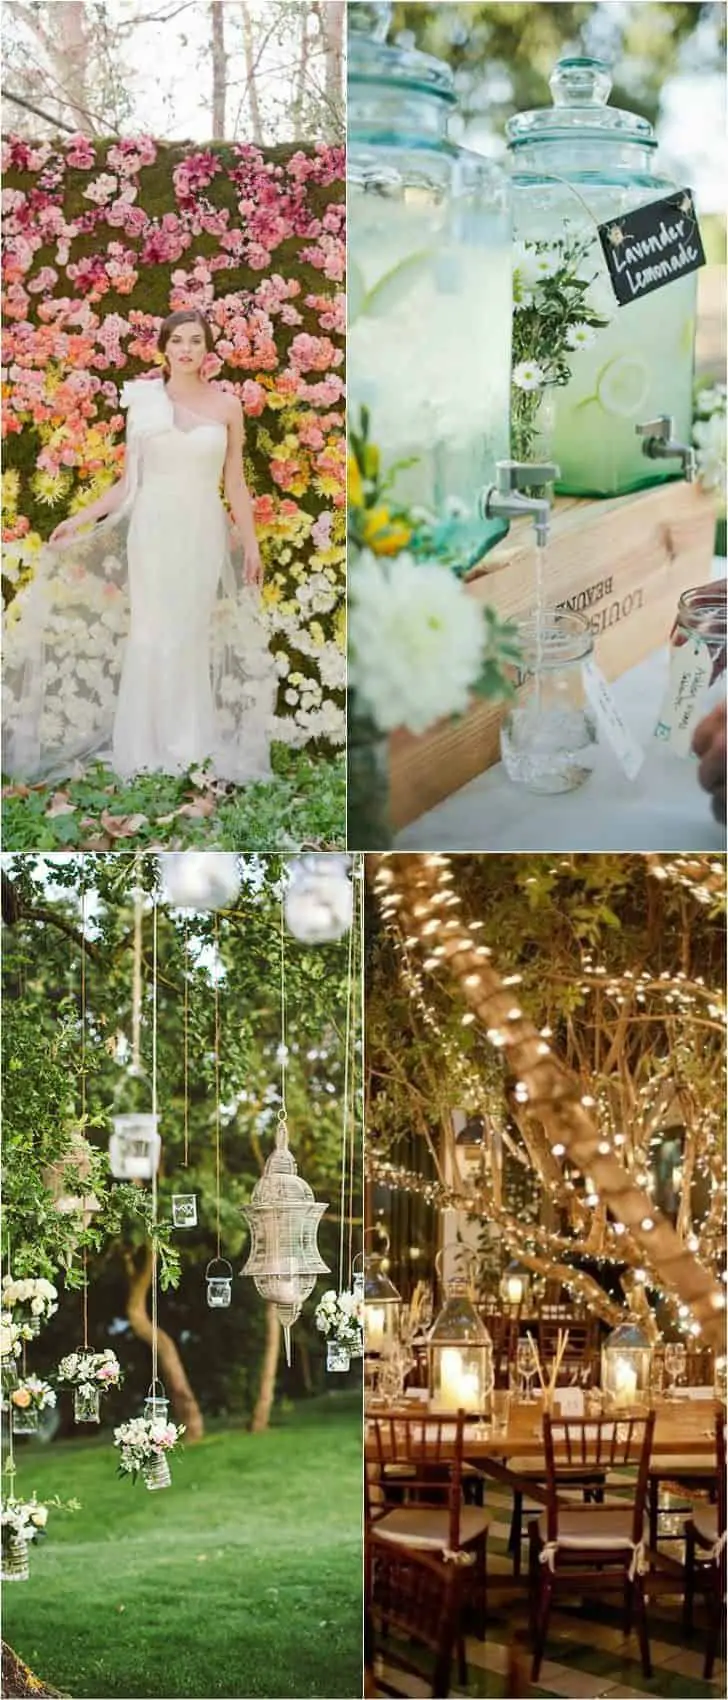 10 Shabby Chic Garden Wedding Decoration Ideas